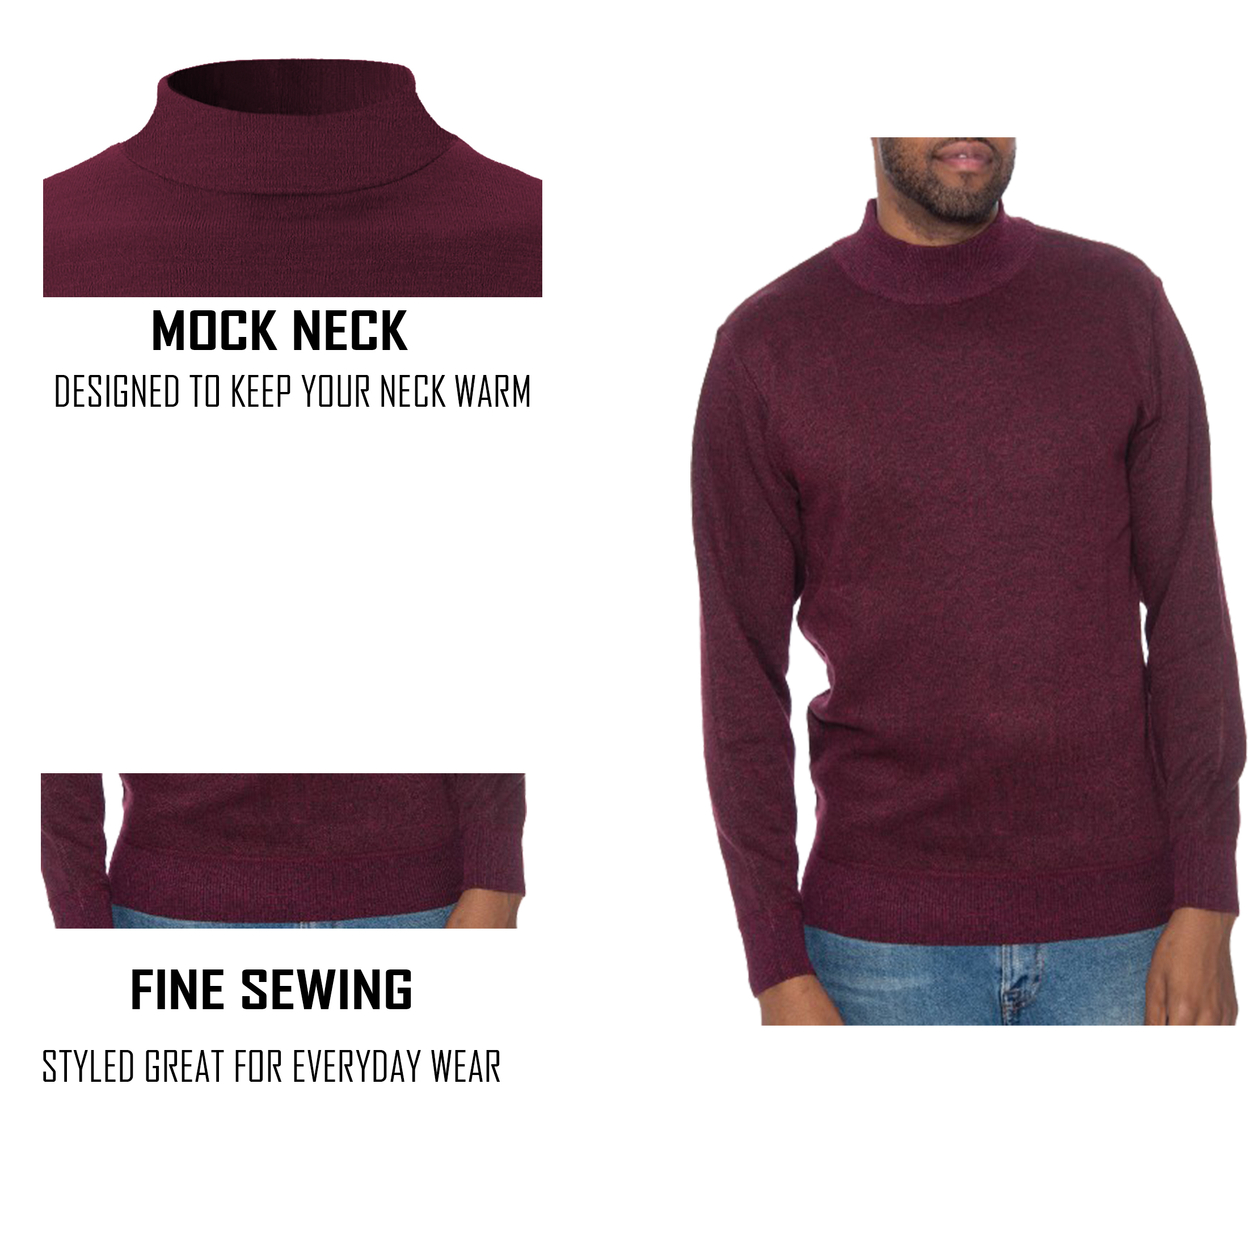 2-Pack: Men's Winter Warm Cozy Knit Slim Fit Mock Neck Sweater - Black& Burgundy, Medium